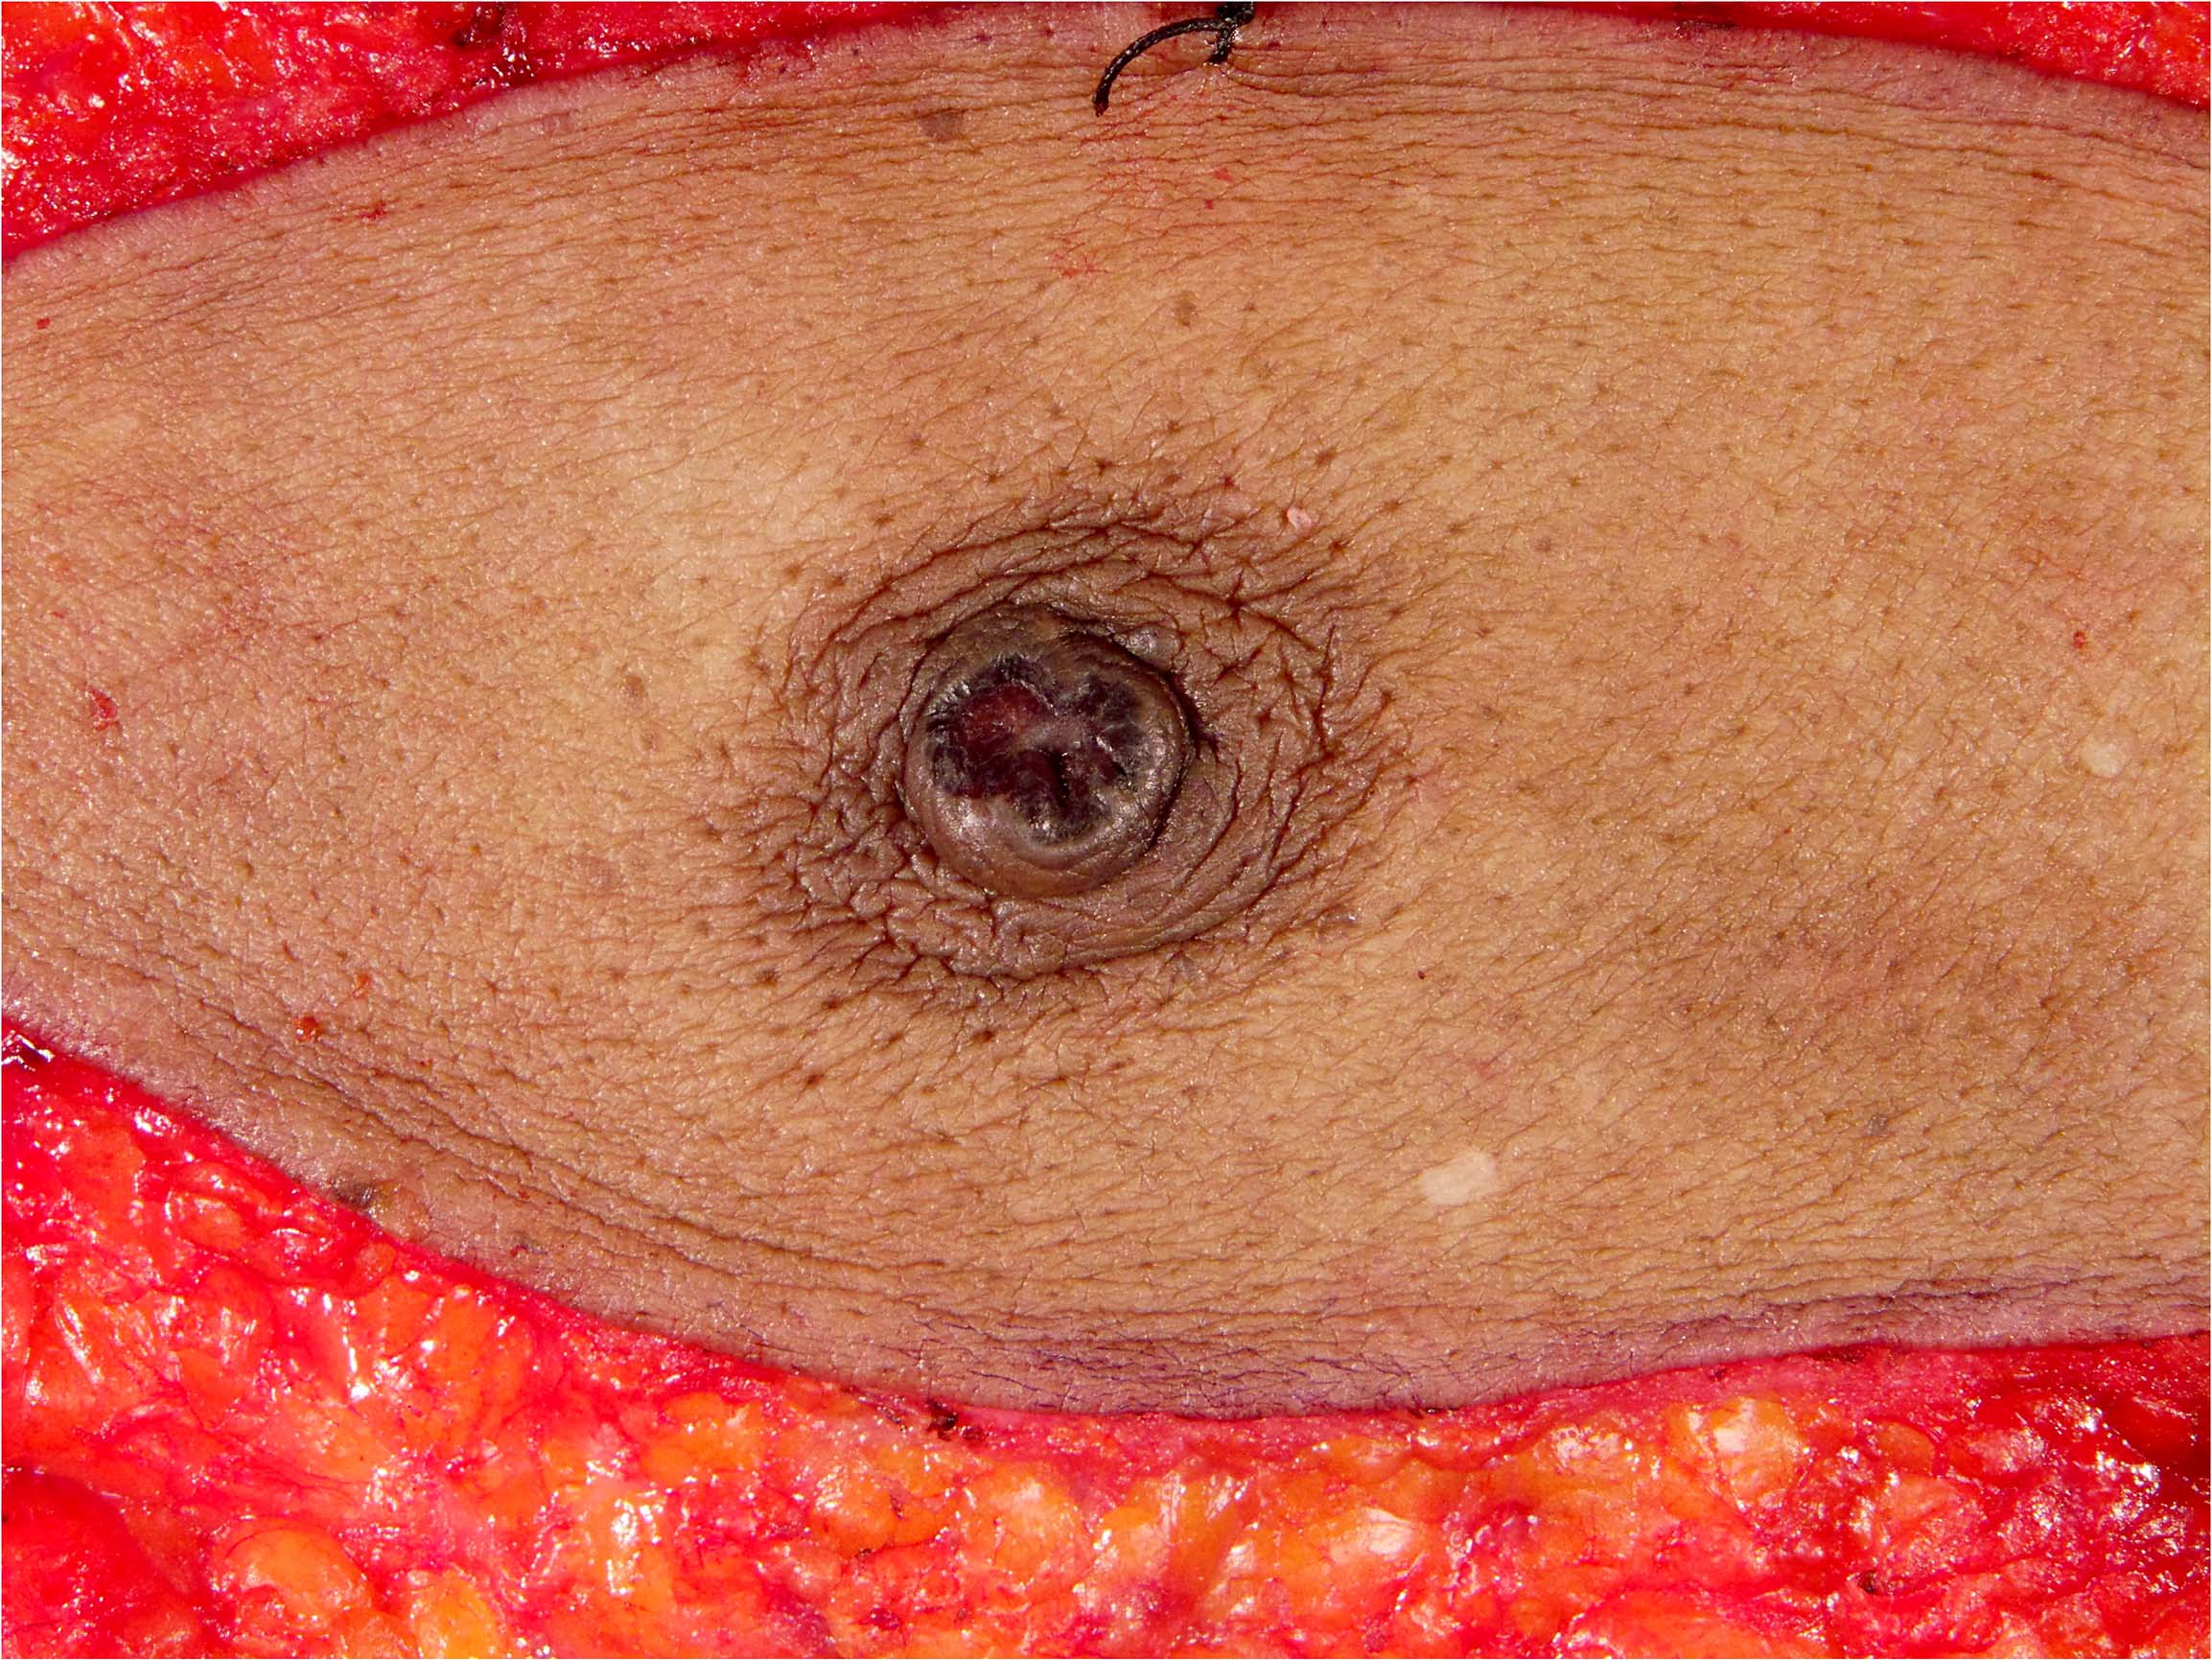 Nipple ulceration